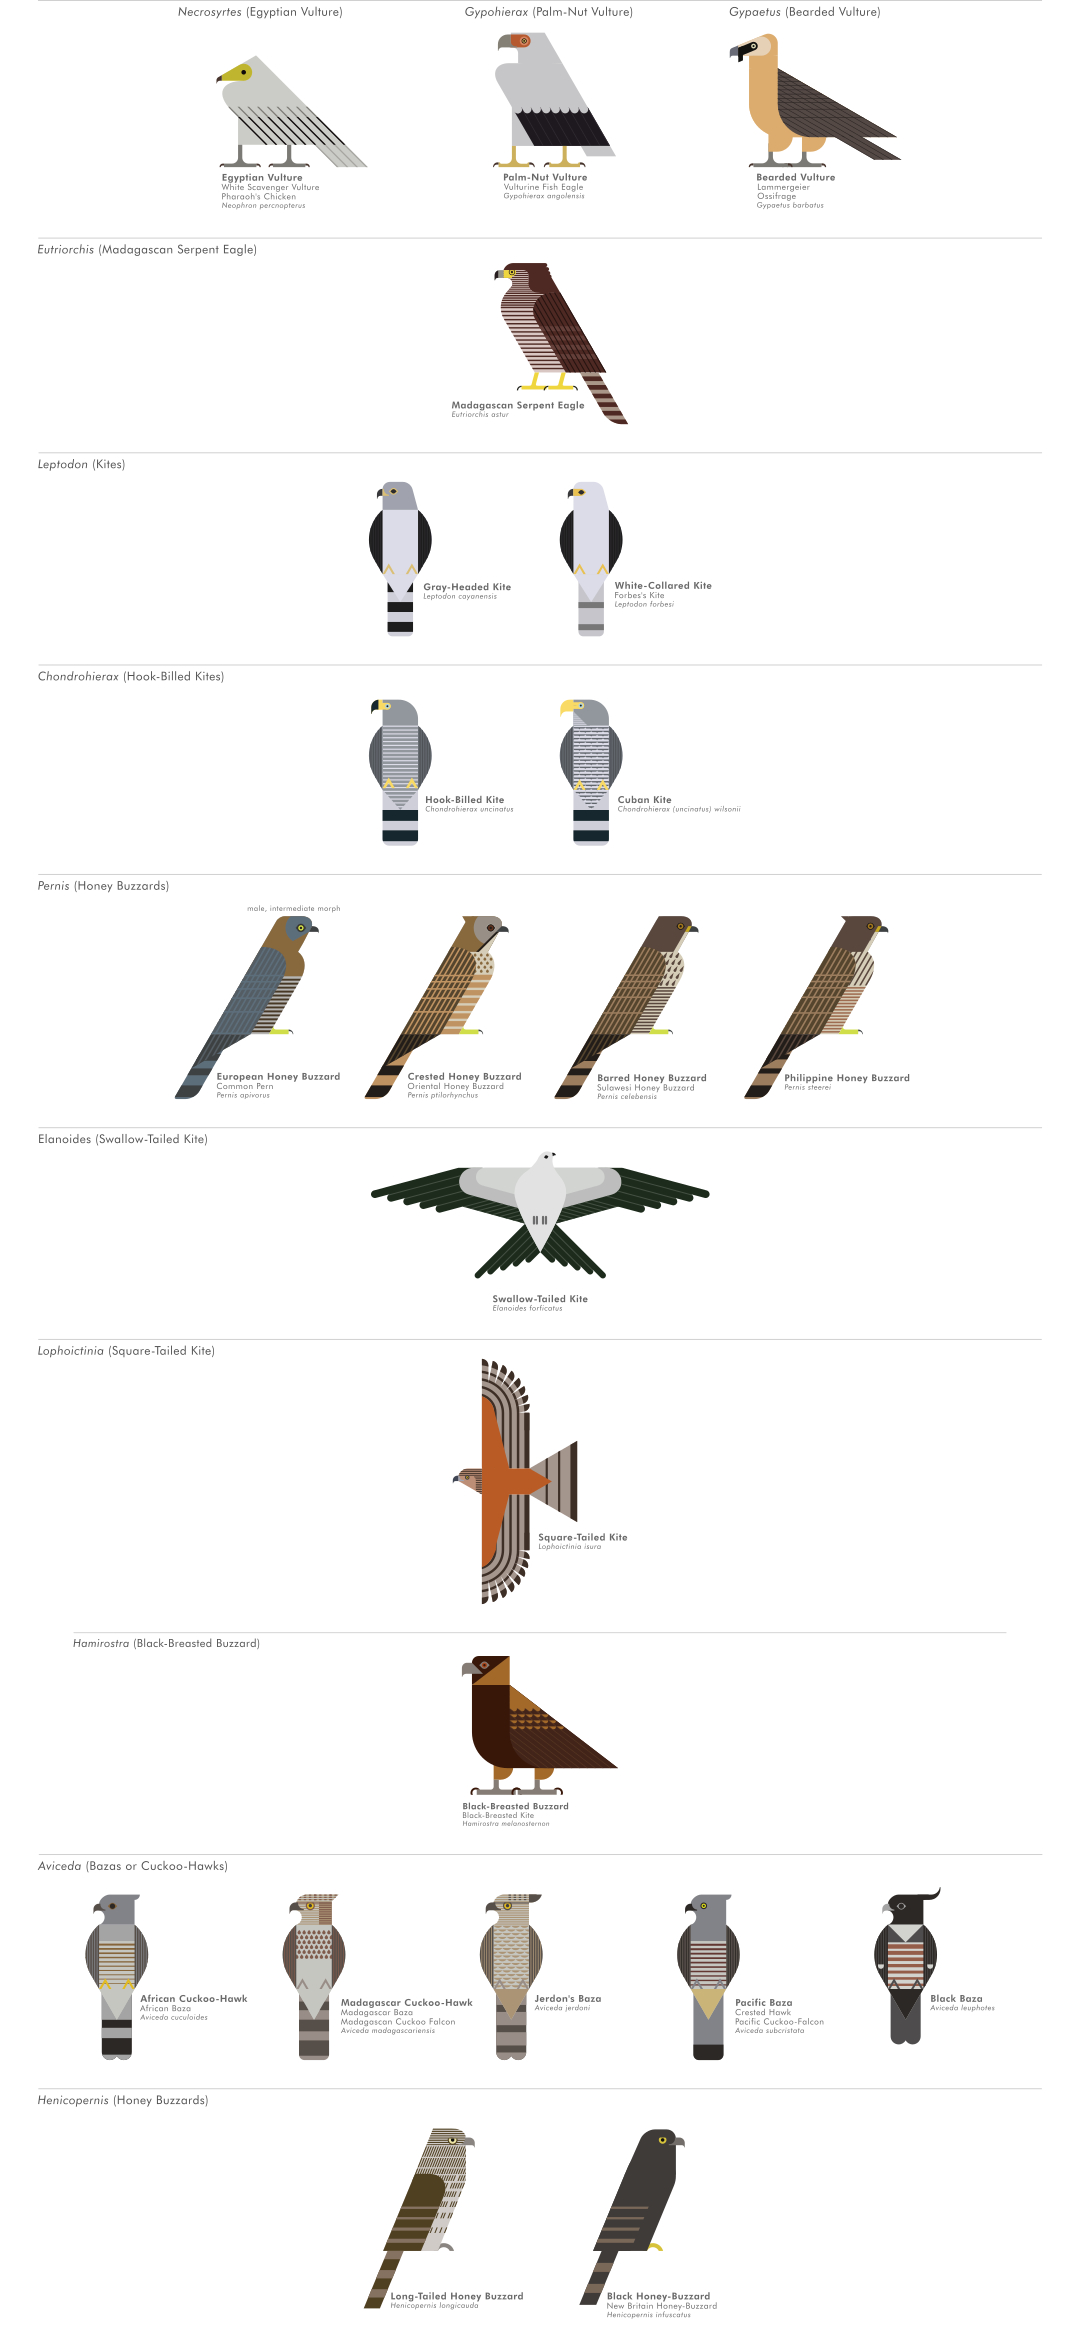 scott partridge - ave - avian vector encyclopedia - accipitriformes - bird vector art